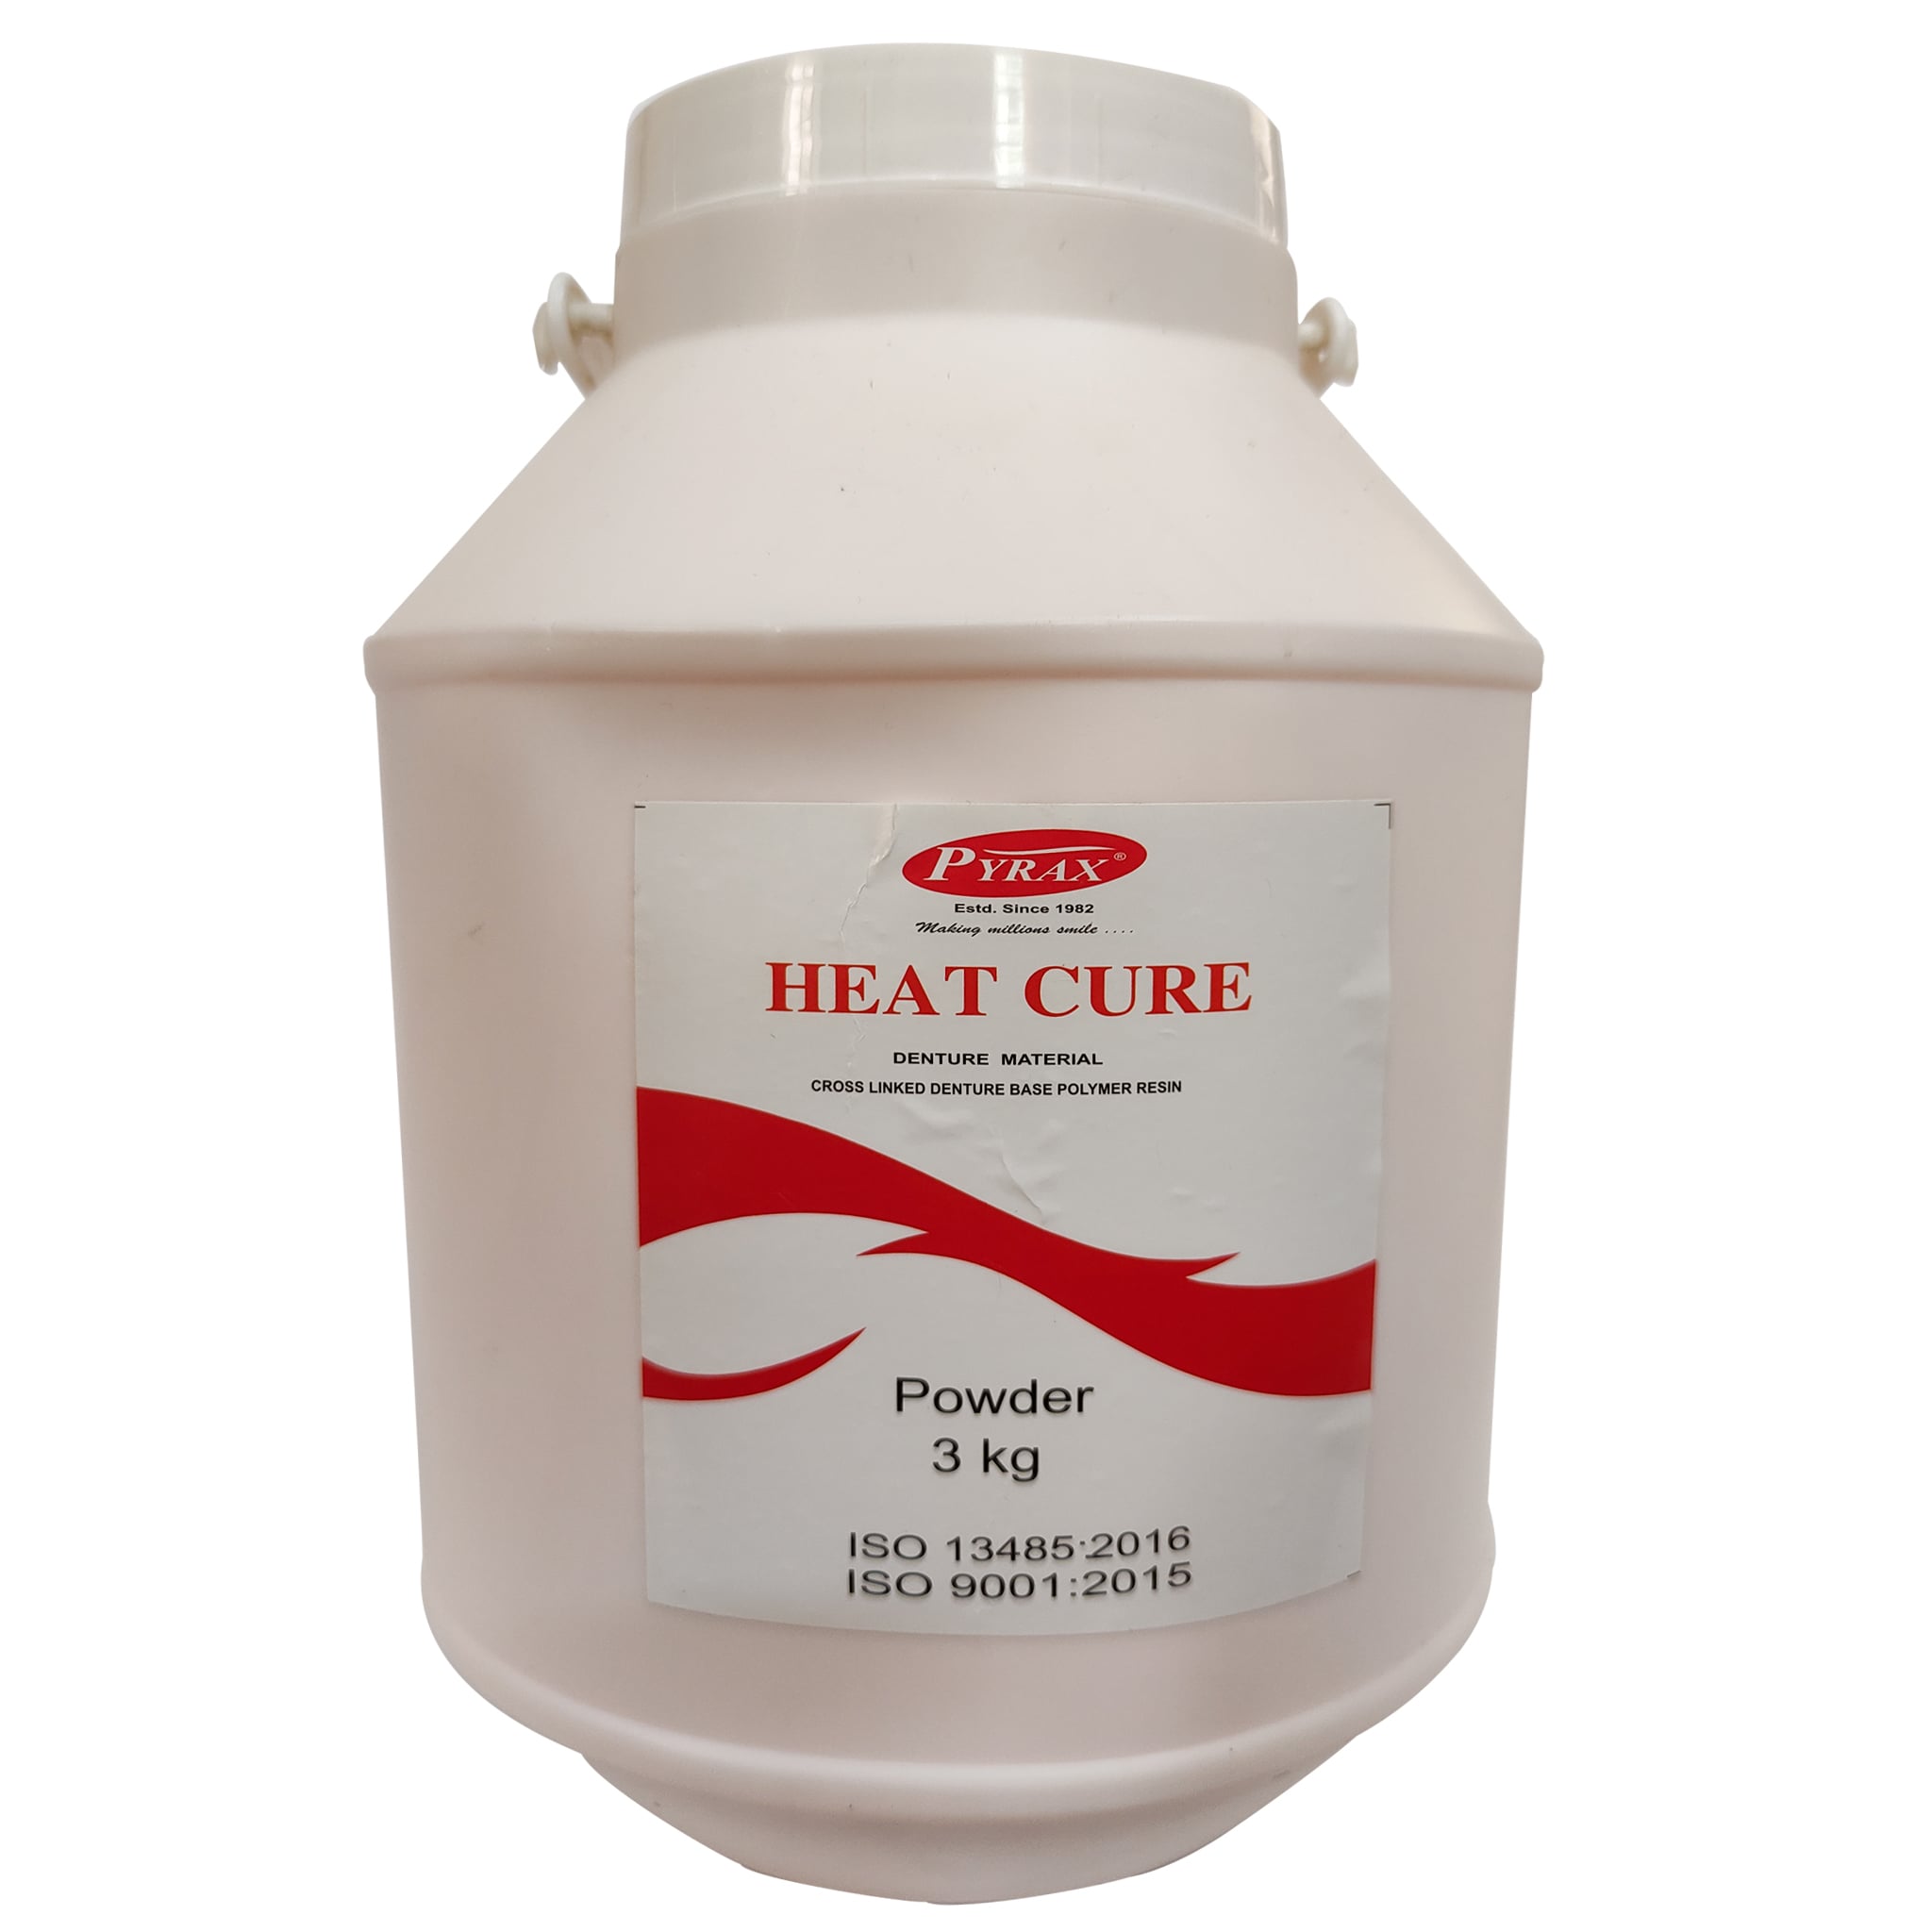 Pyrax Heat Cure Powder 3 Kg